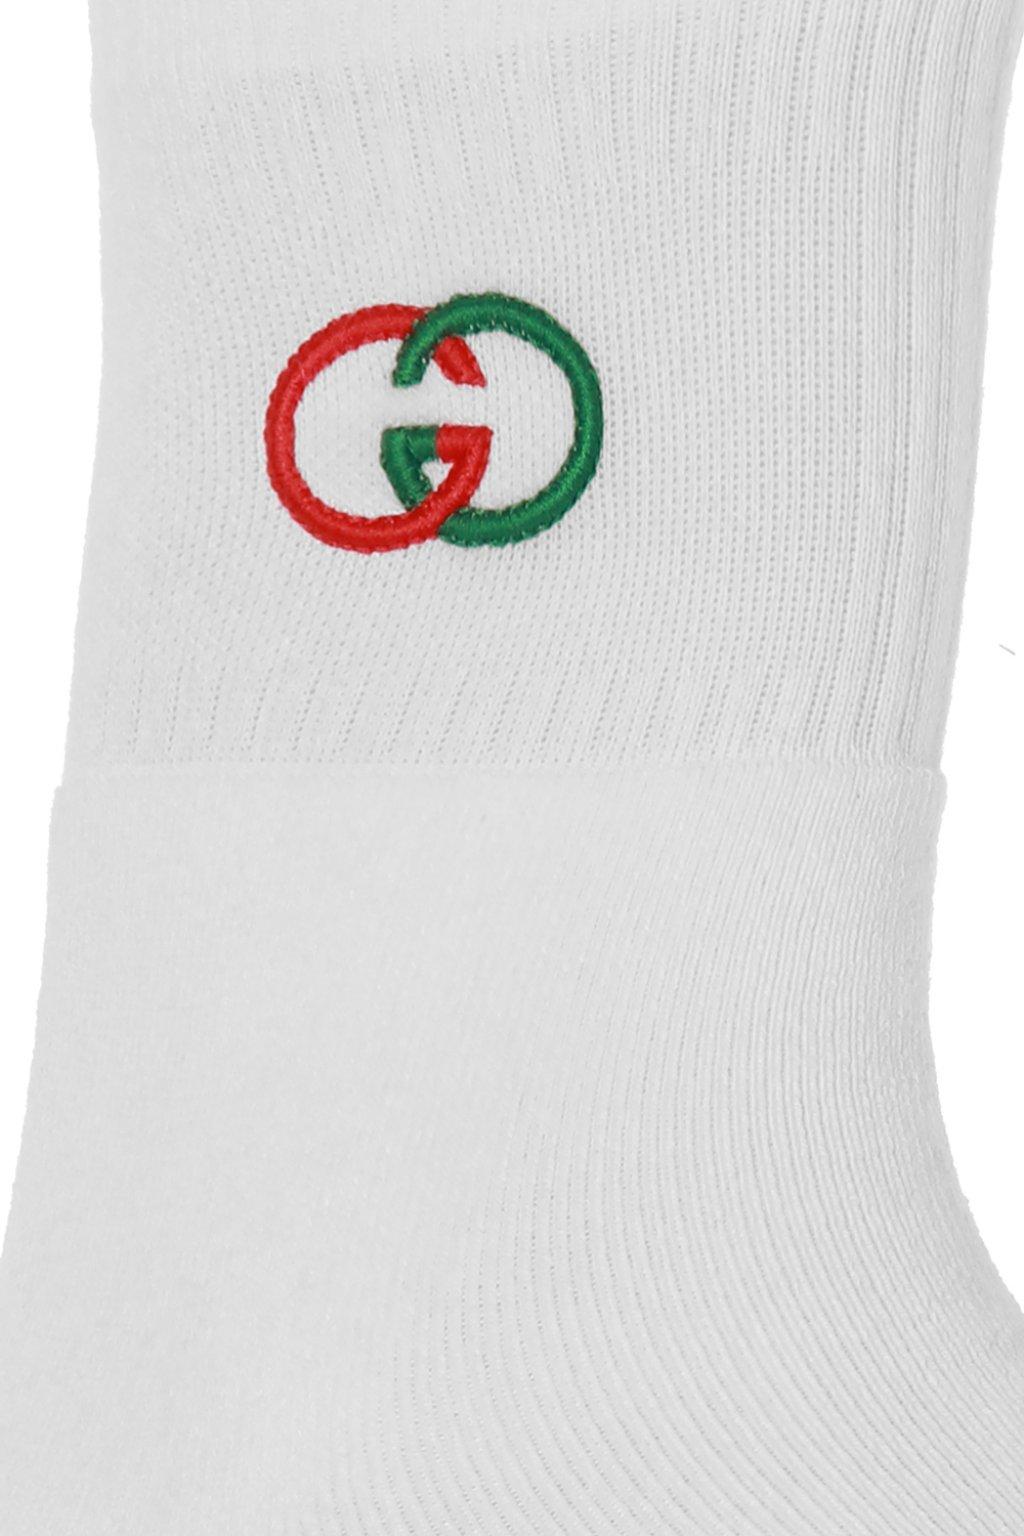 Gucci Cotton Branded Socks in White for Men - Lyst